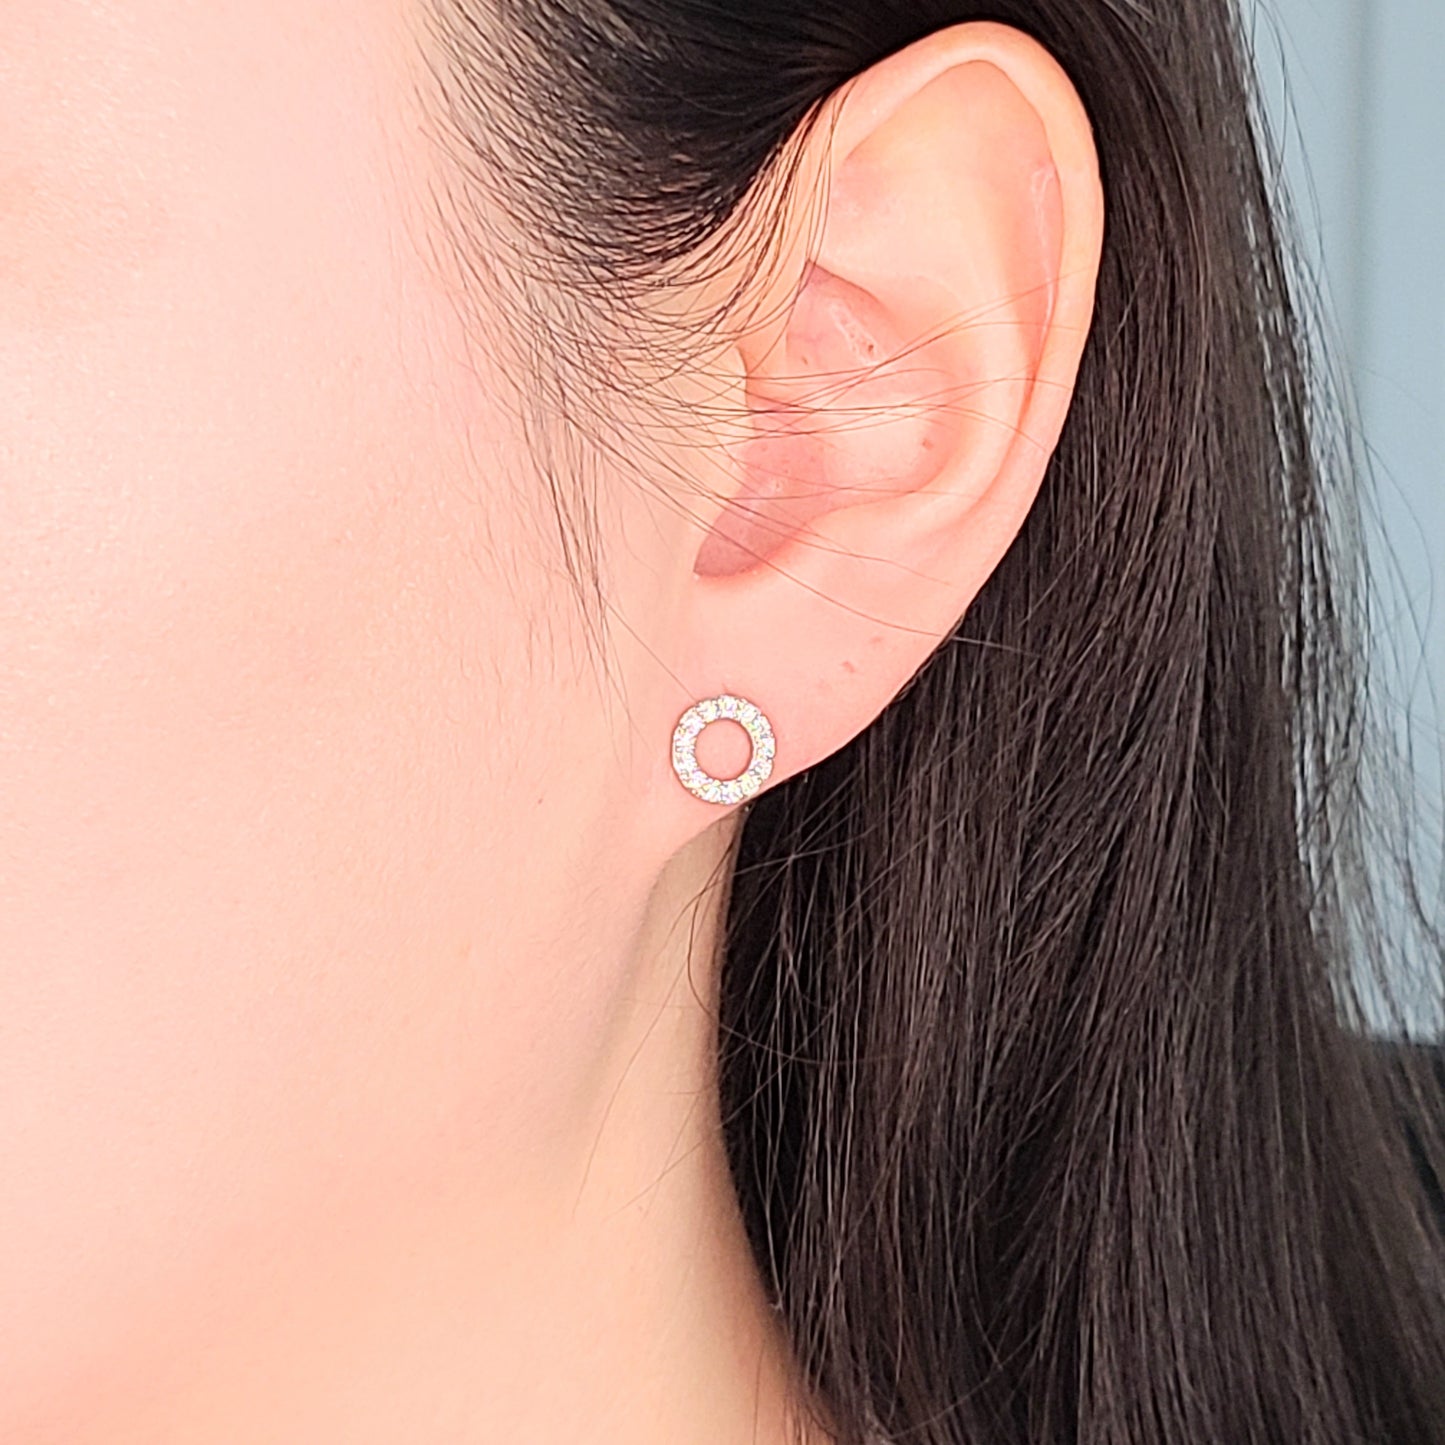 Diamond 8.4mm Open Circle Earrings / Minimalist Earrings / Stud Circle Earrings / 14k Dainty Earrings / 100% Natural Diamonds / Gifts for Her